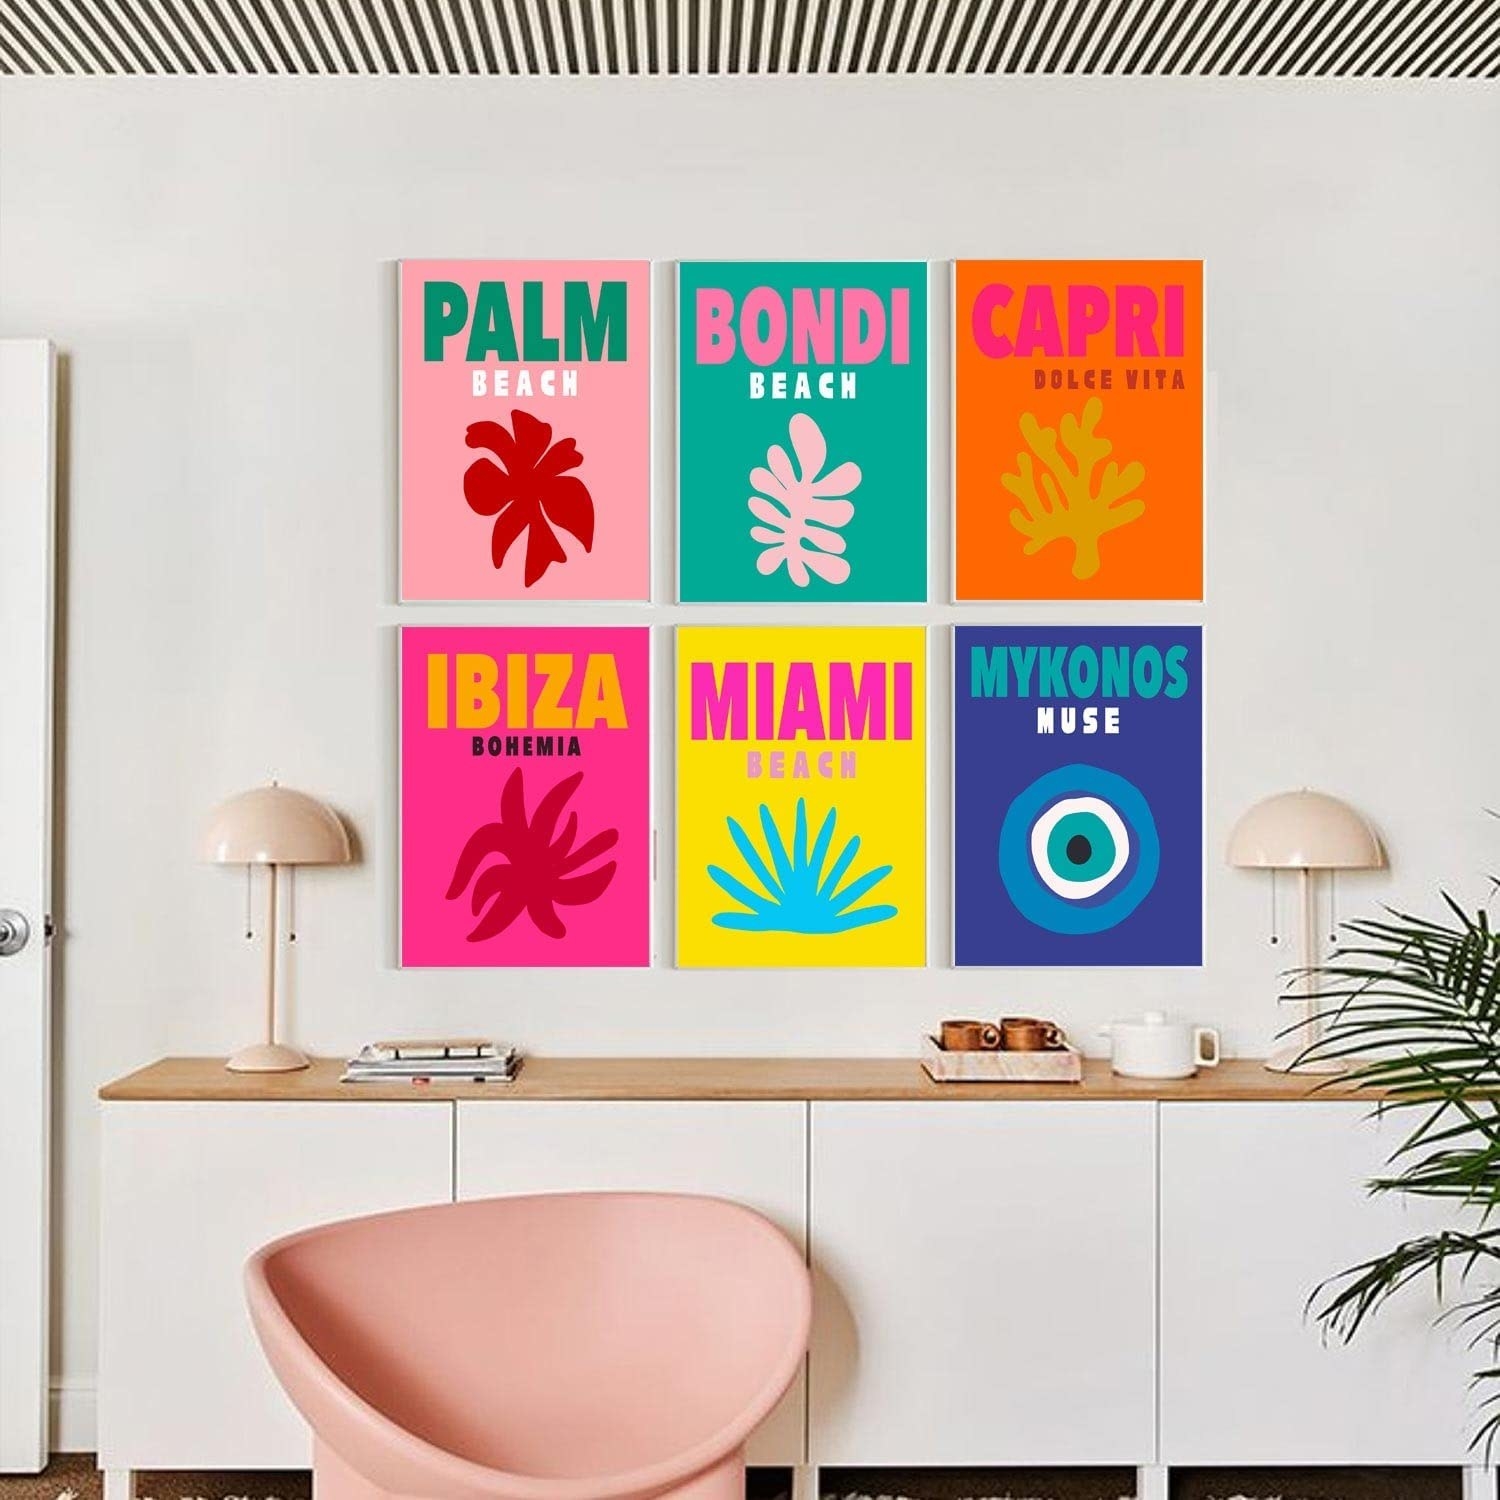 Travel posters for Palm Beach, Bondi Beach, Capri, Ibiza, Miami and Mykonos